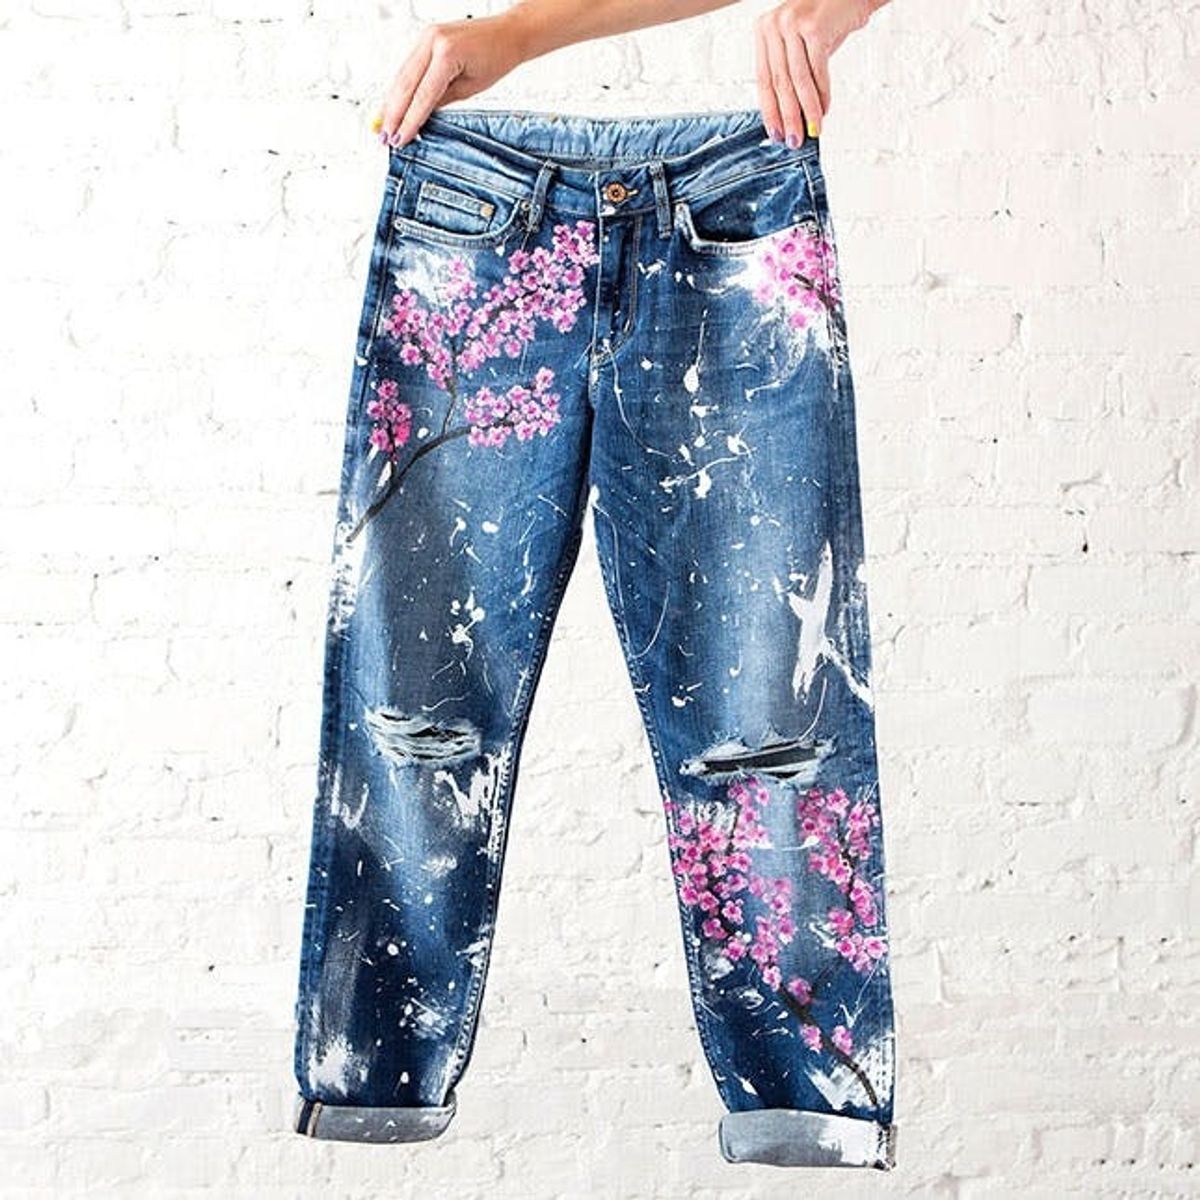 How to DIY Blake Lively’s $500 Cherry Blossom Boyfriend Jeans